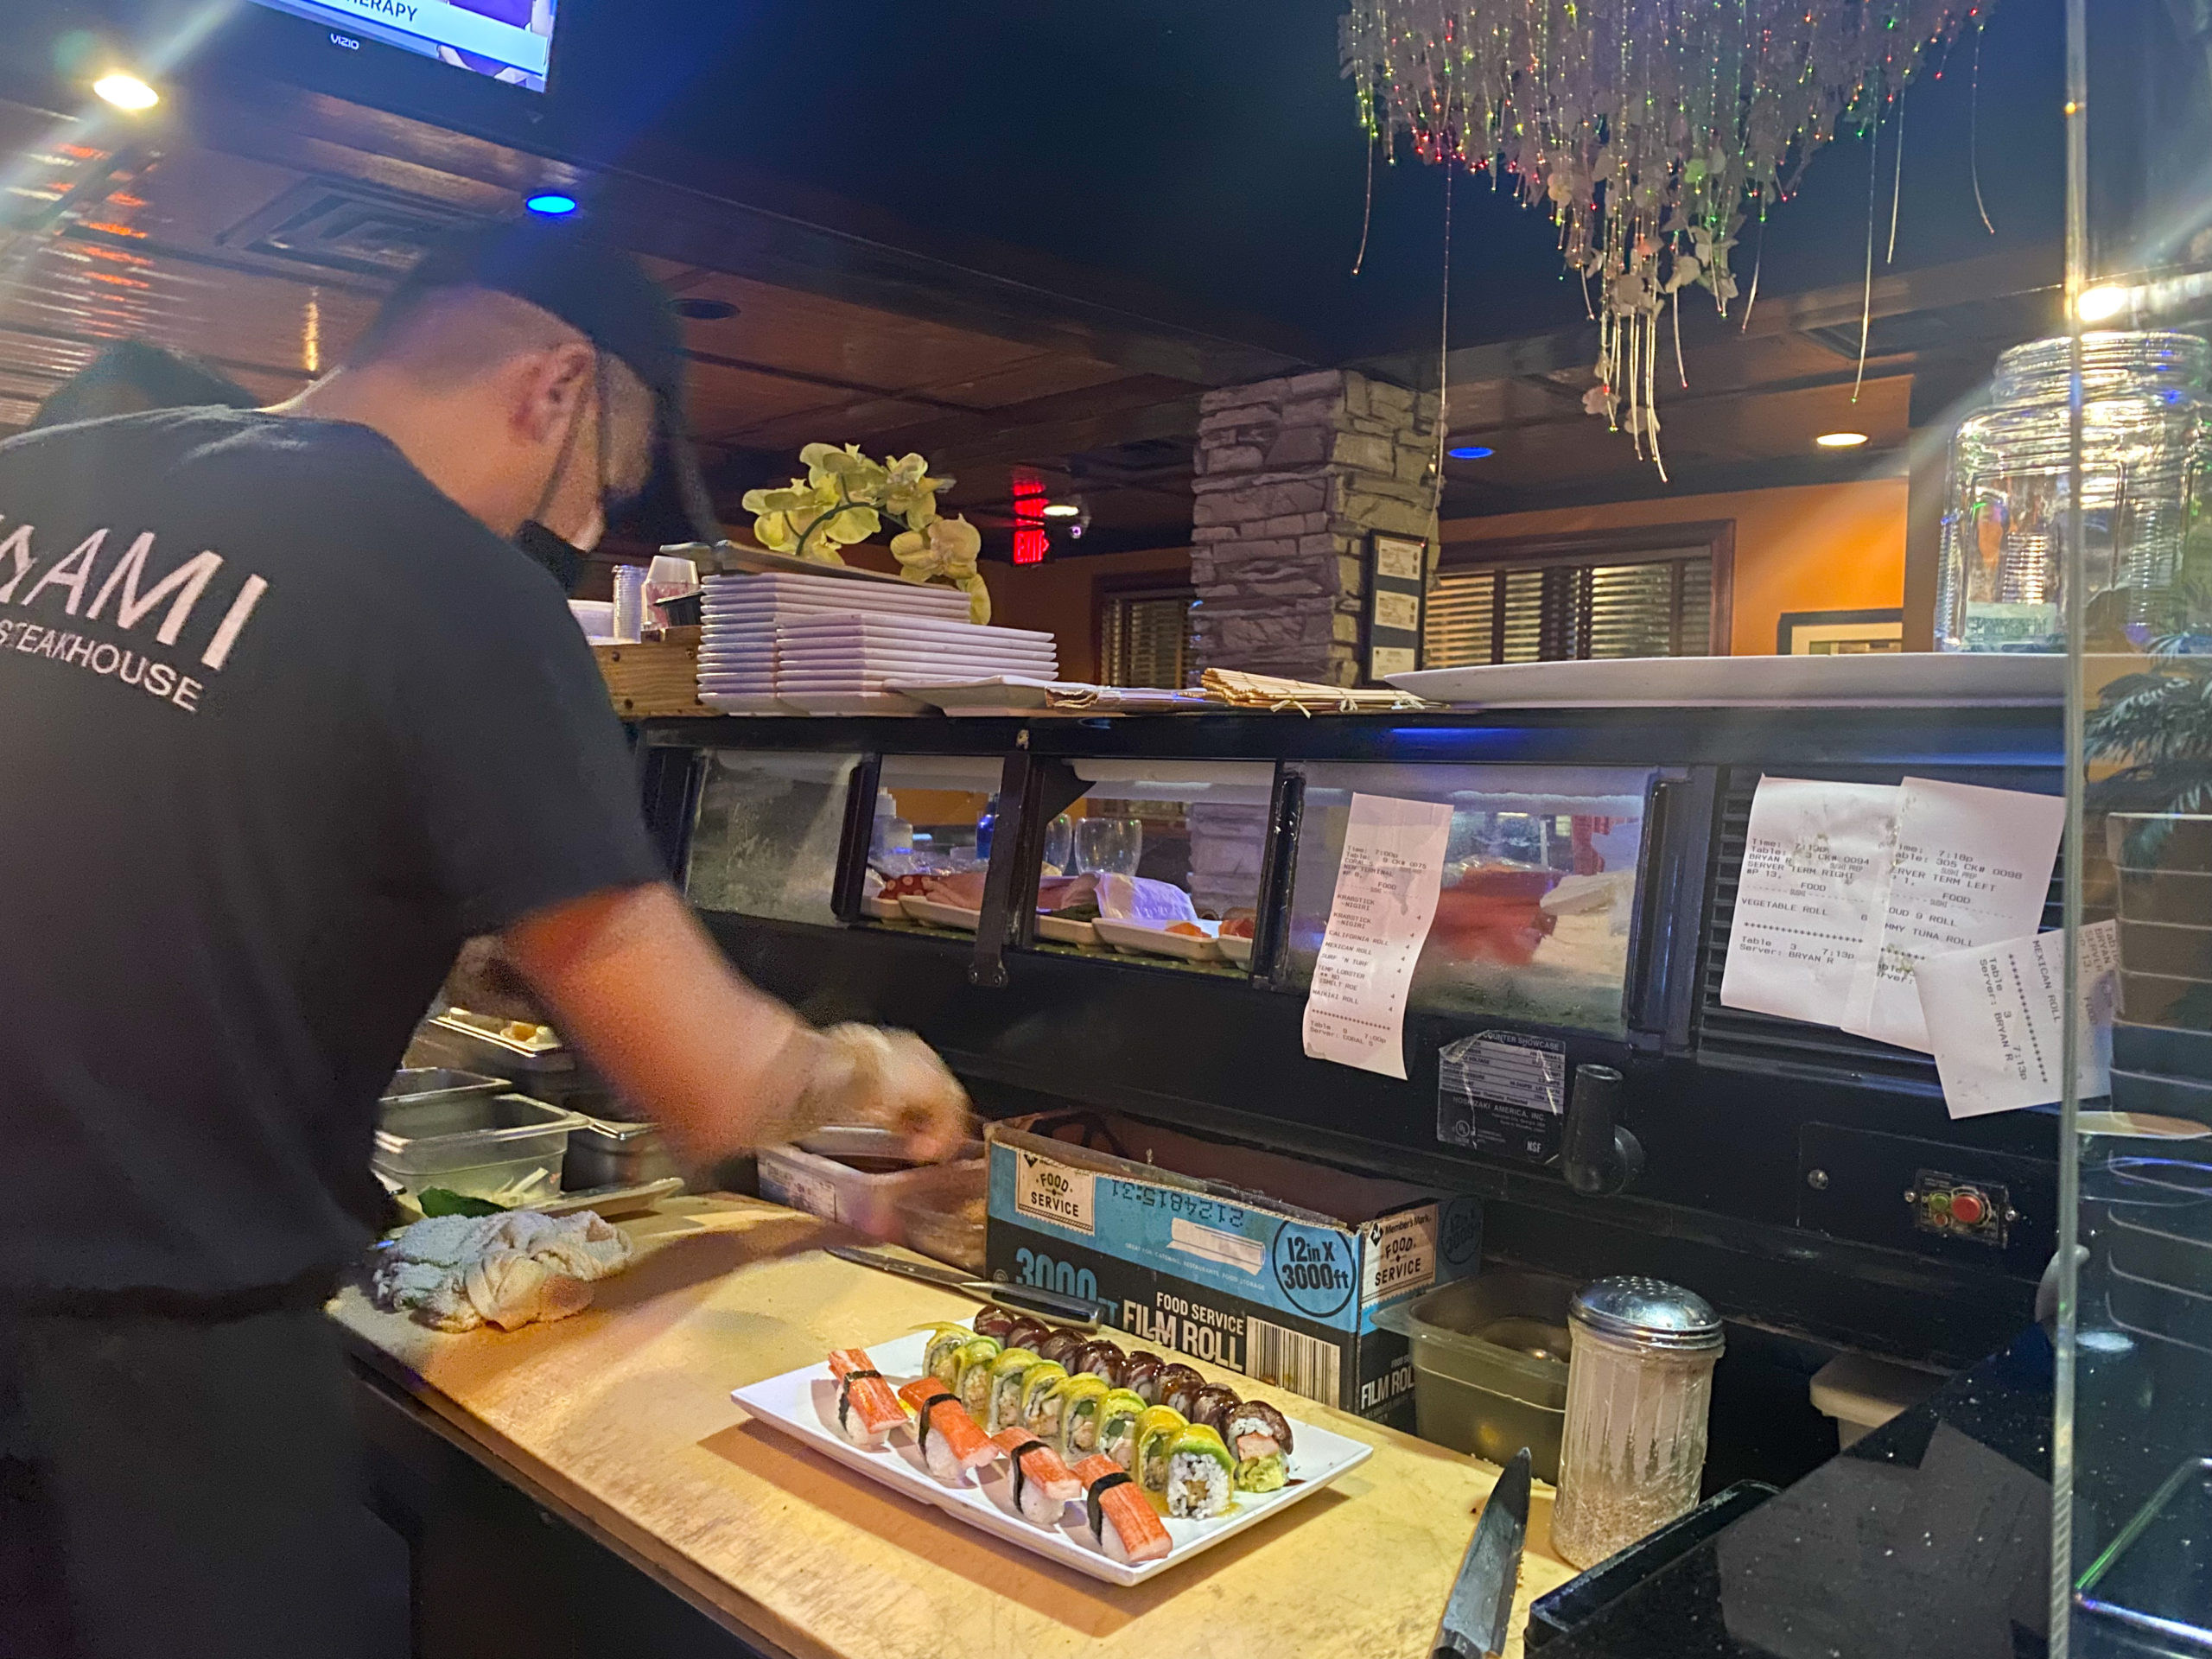 The chef prepairing the sushi